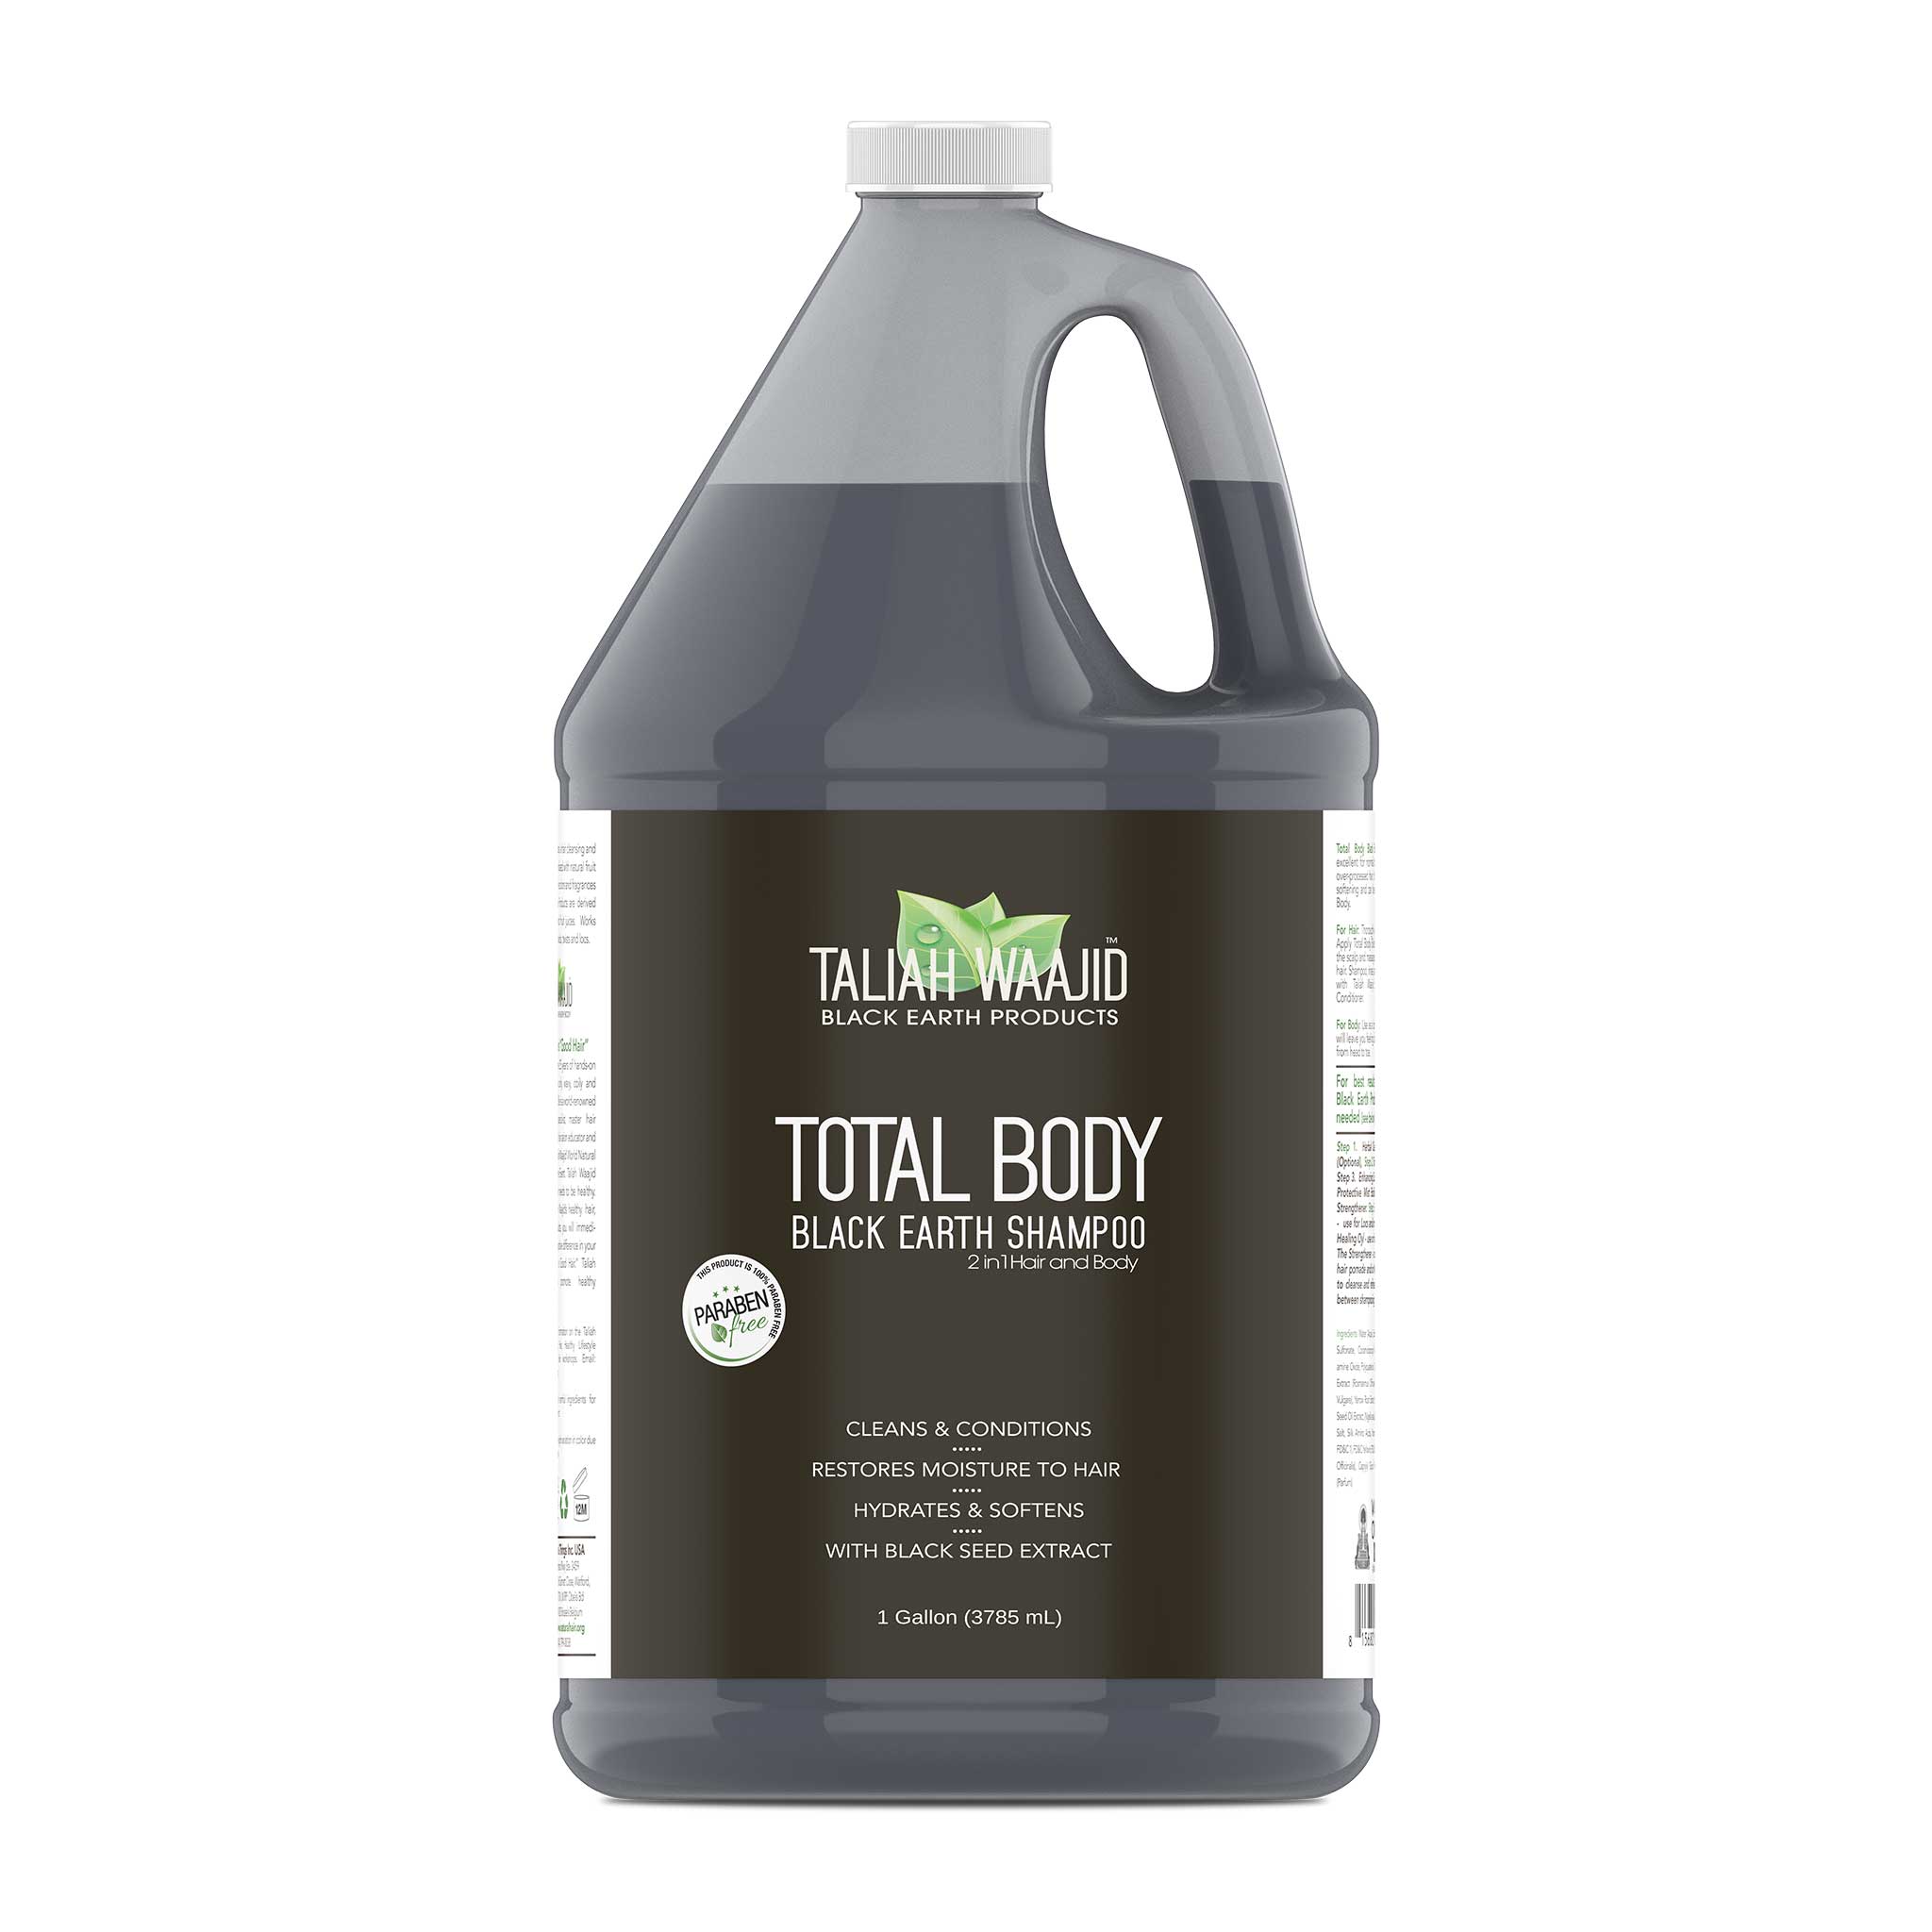 Black Earth Products Total Body Black Earth Shampoo 1 Gallon